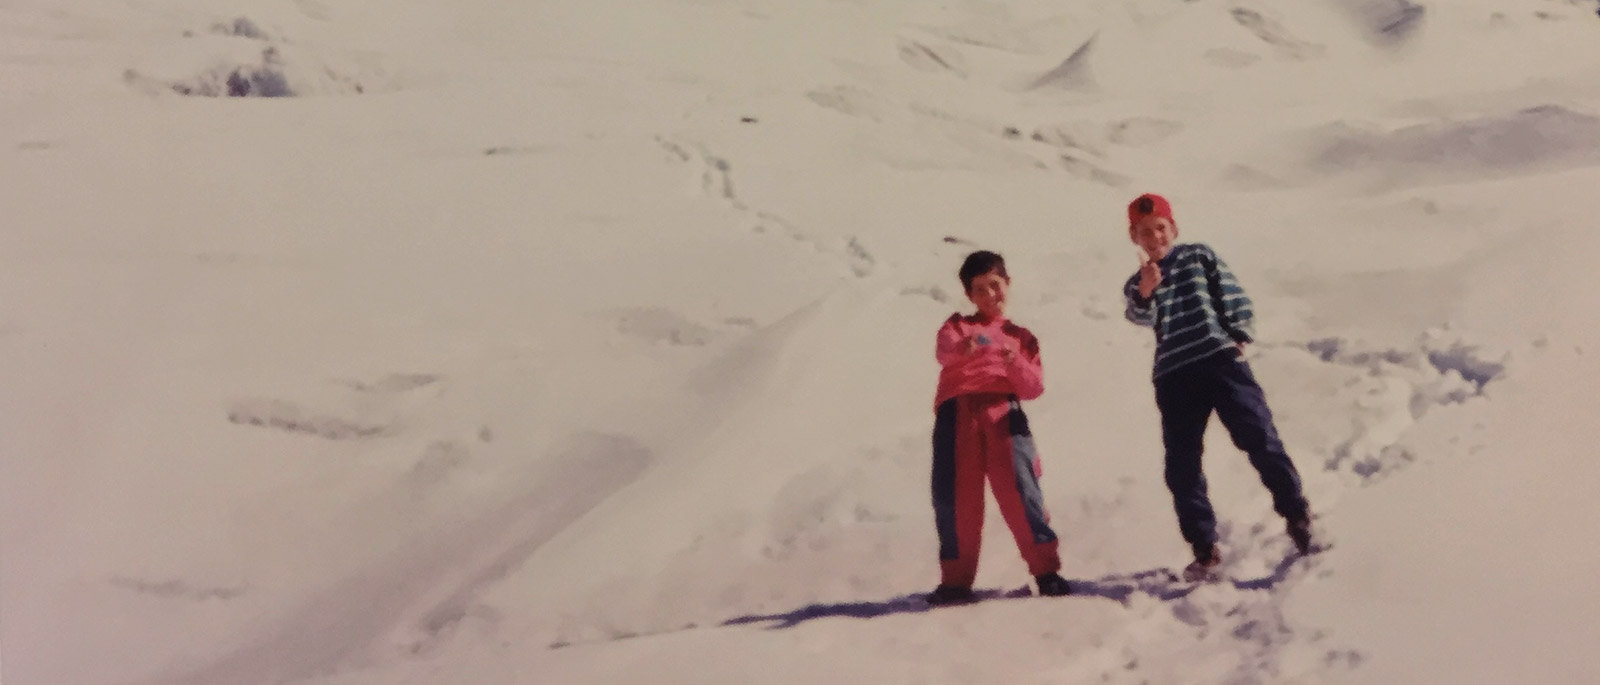 Morado hanging glacier: a childhood memory